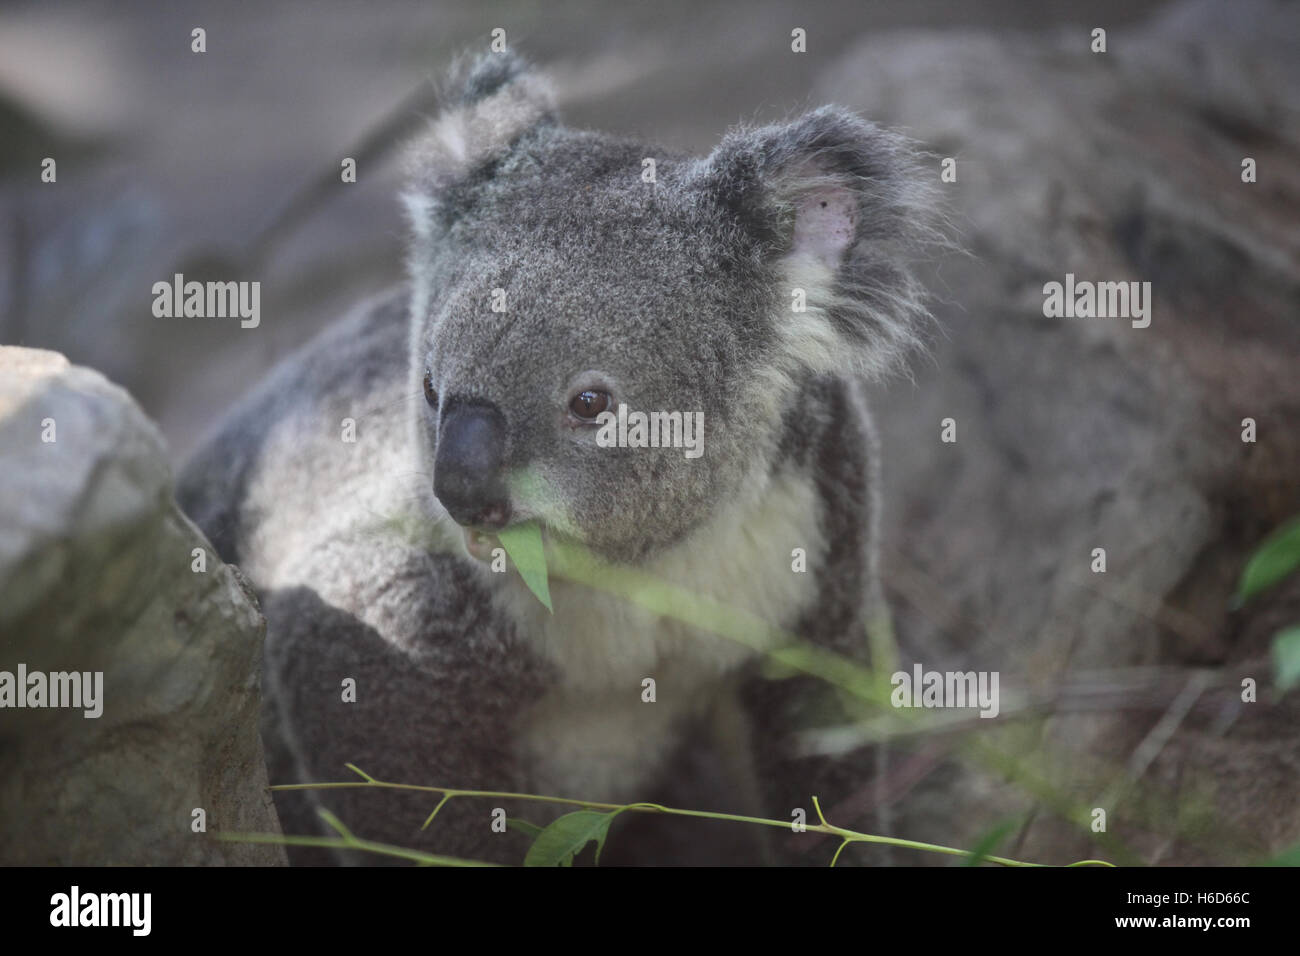 Koala is a small marsupial animal, Thailand, Southeast Asia Stock Photo